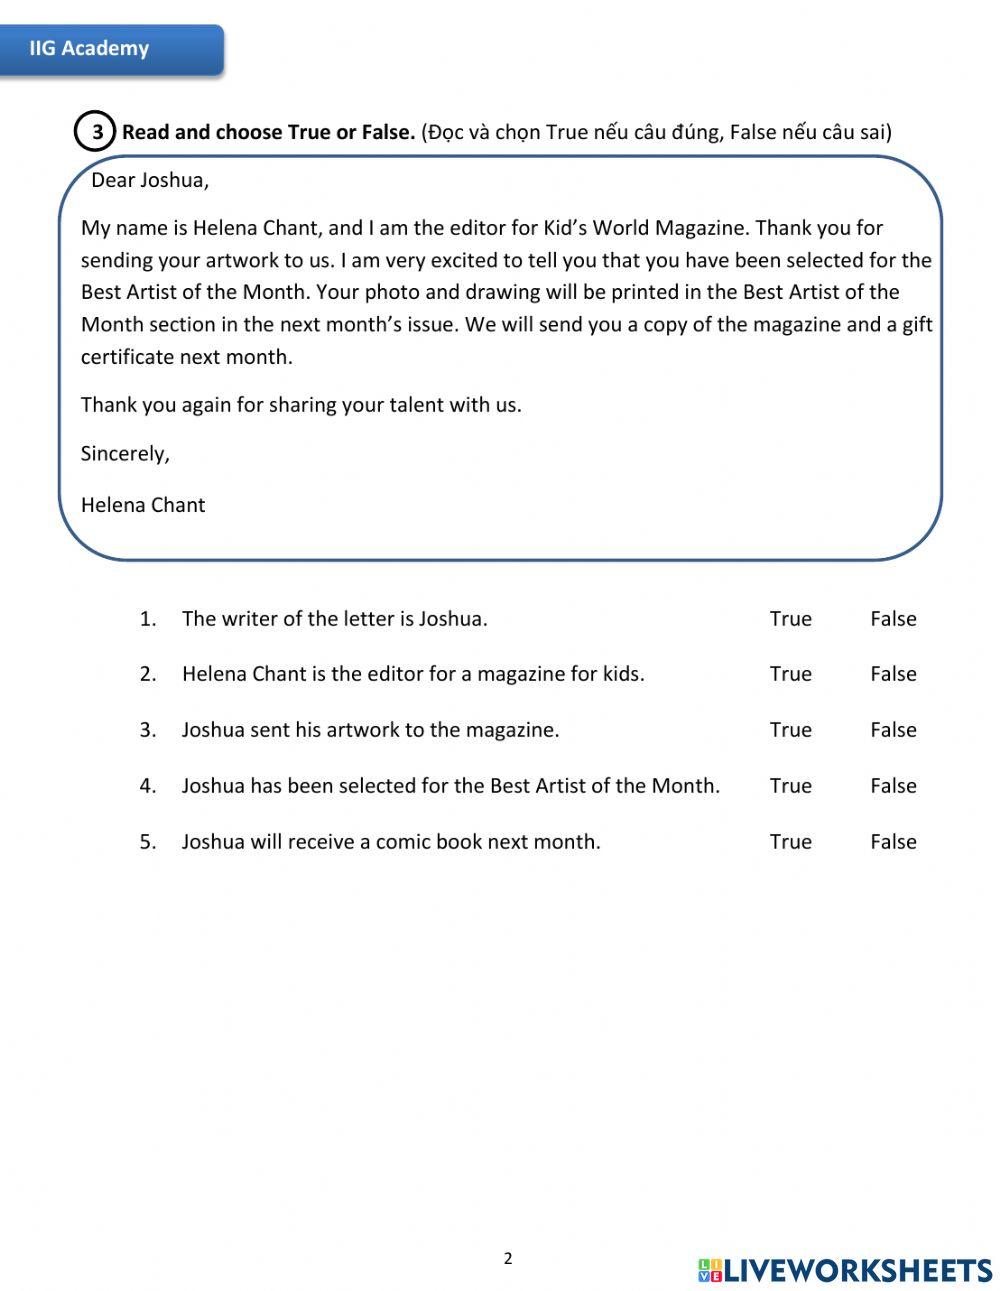 IIG-Grade 5-Worksheet 11